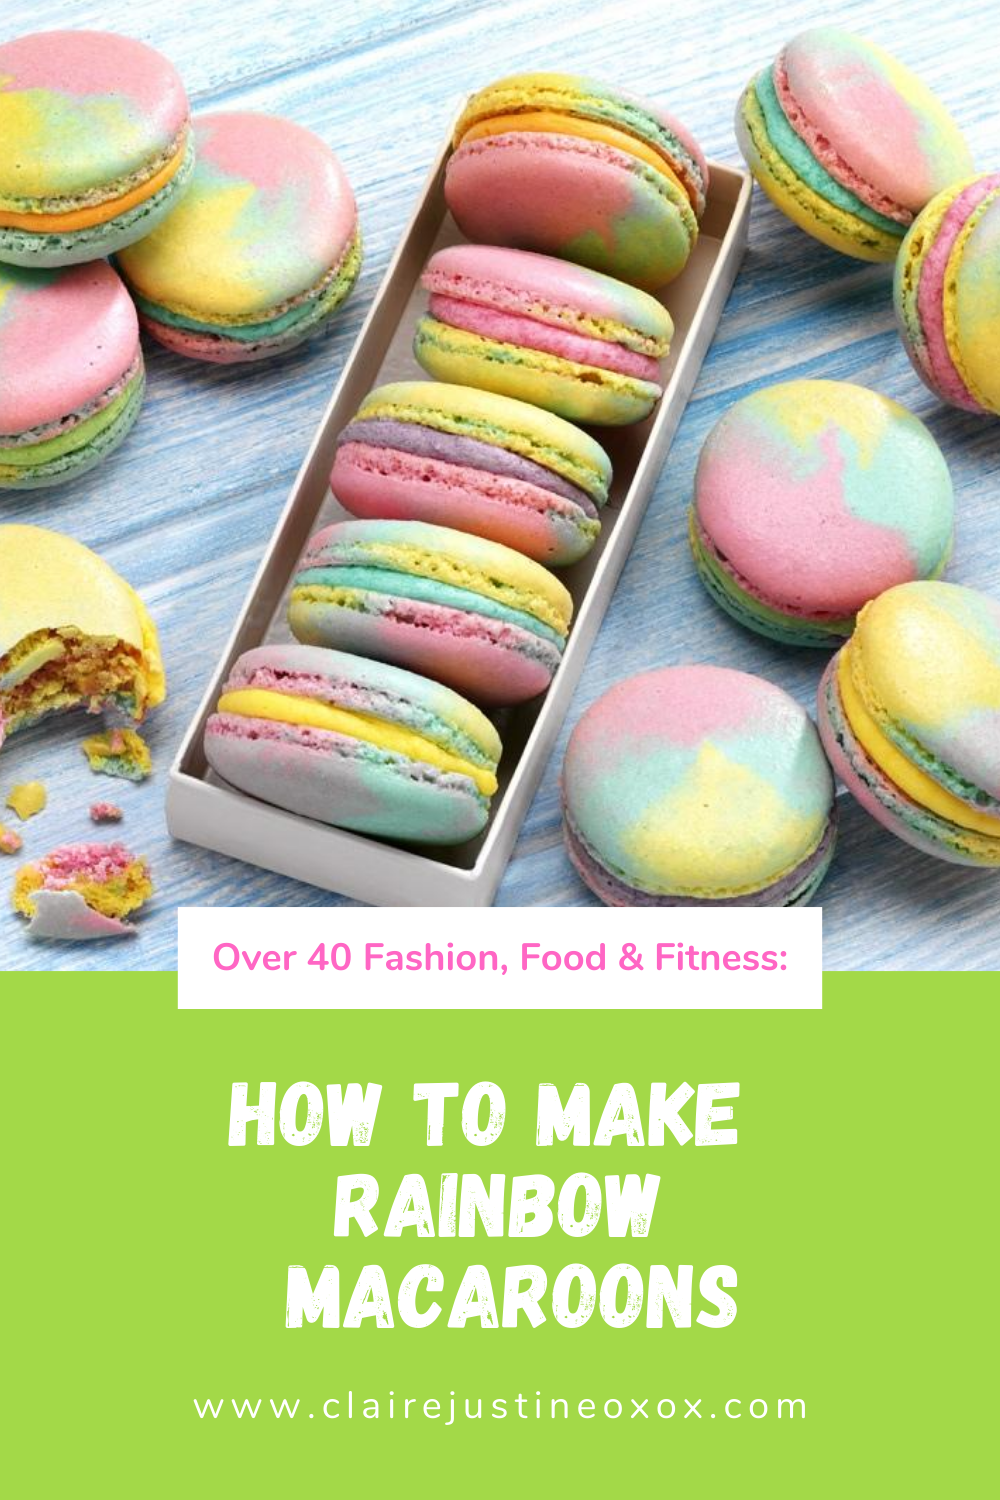 How To Make Rainbow Macaroons